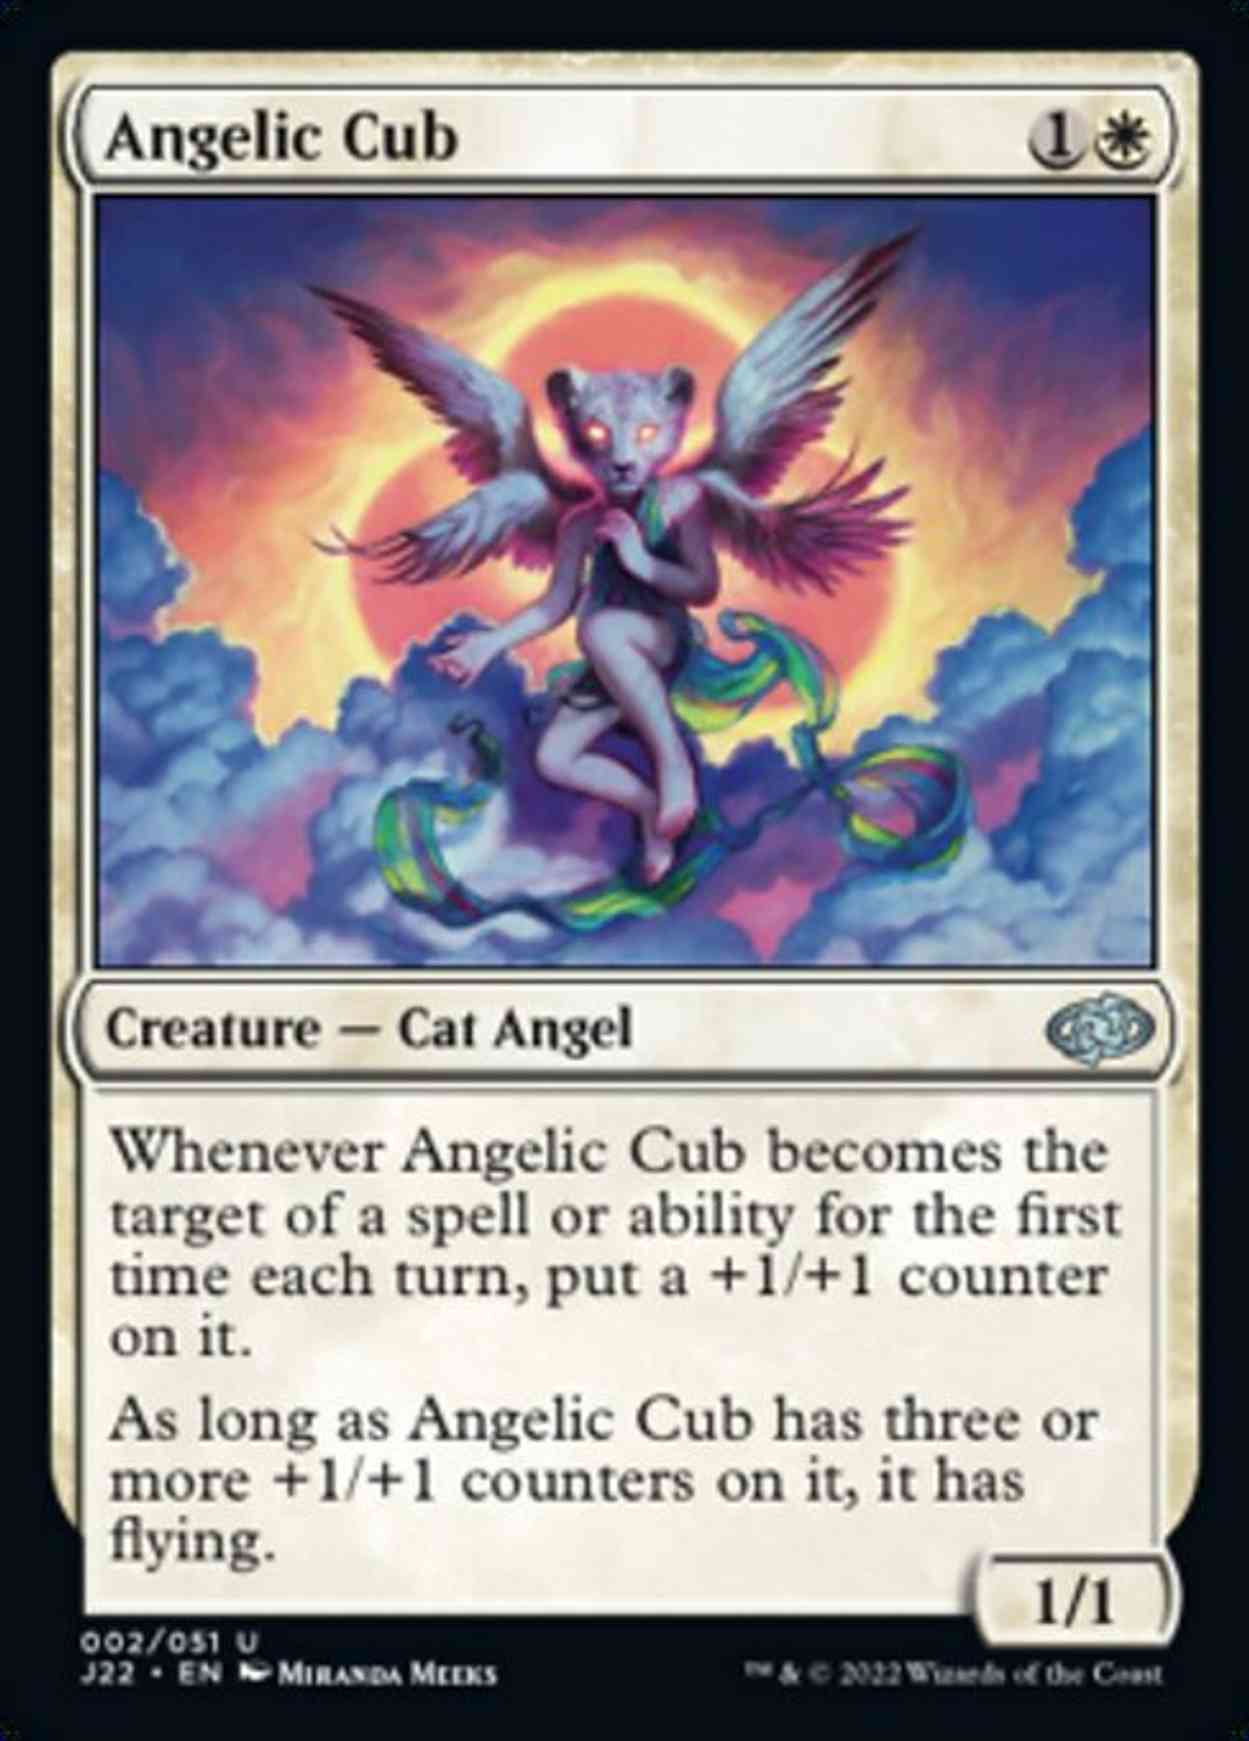 Angelic Cub magic card front